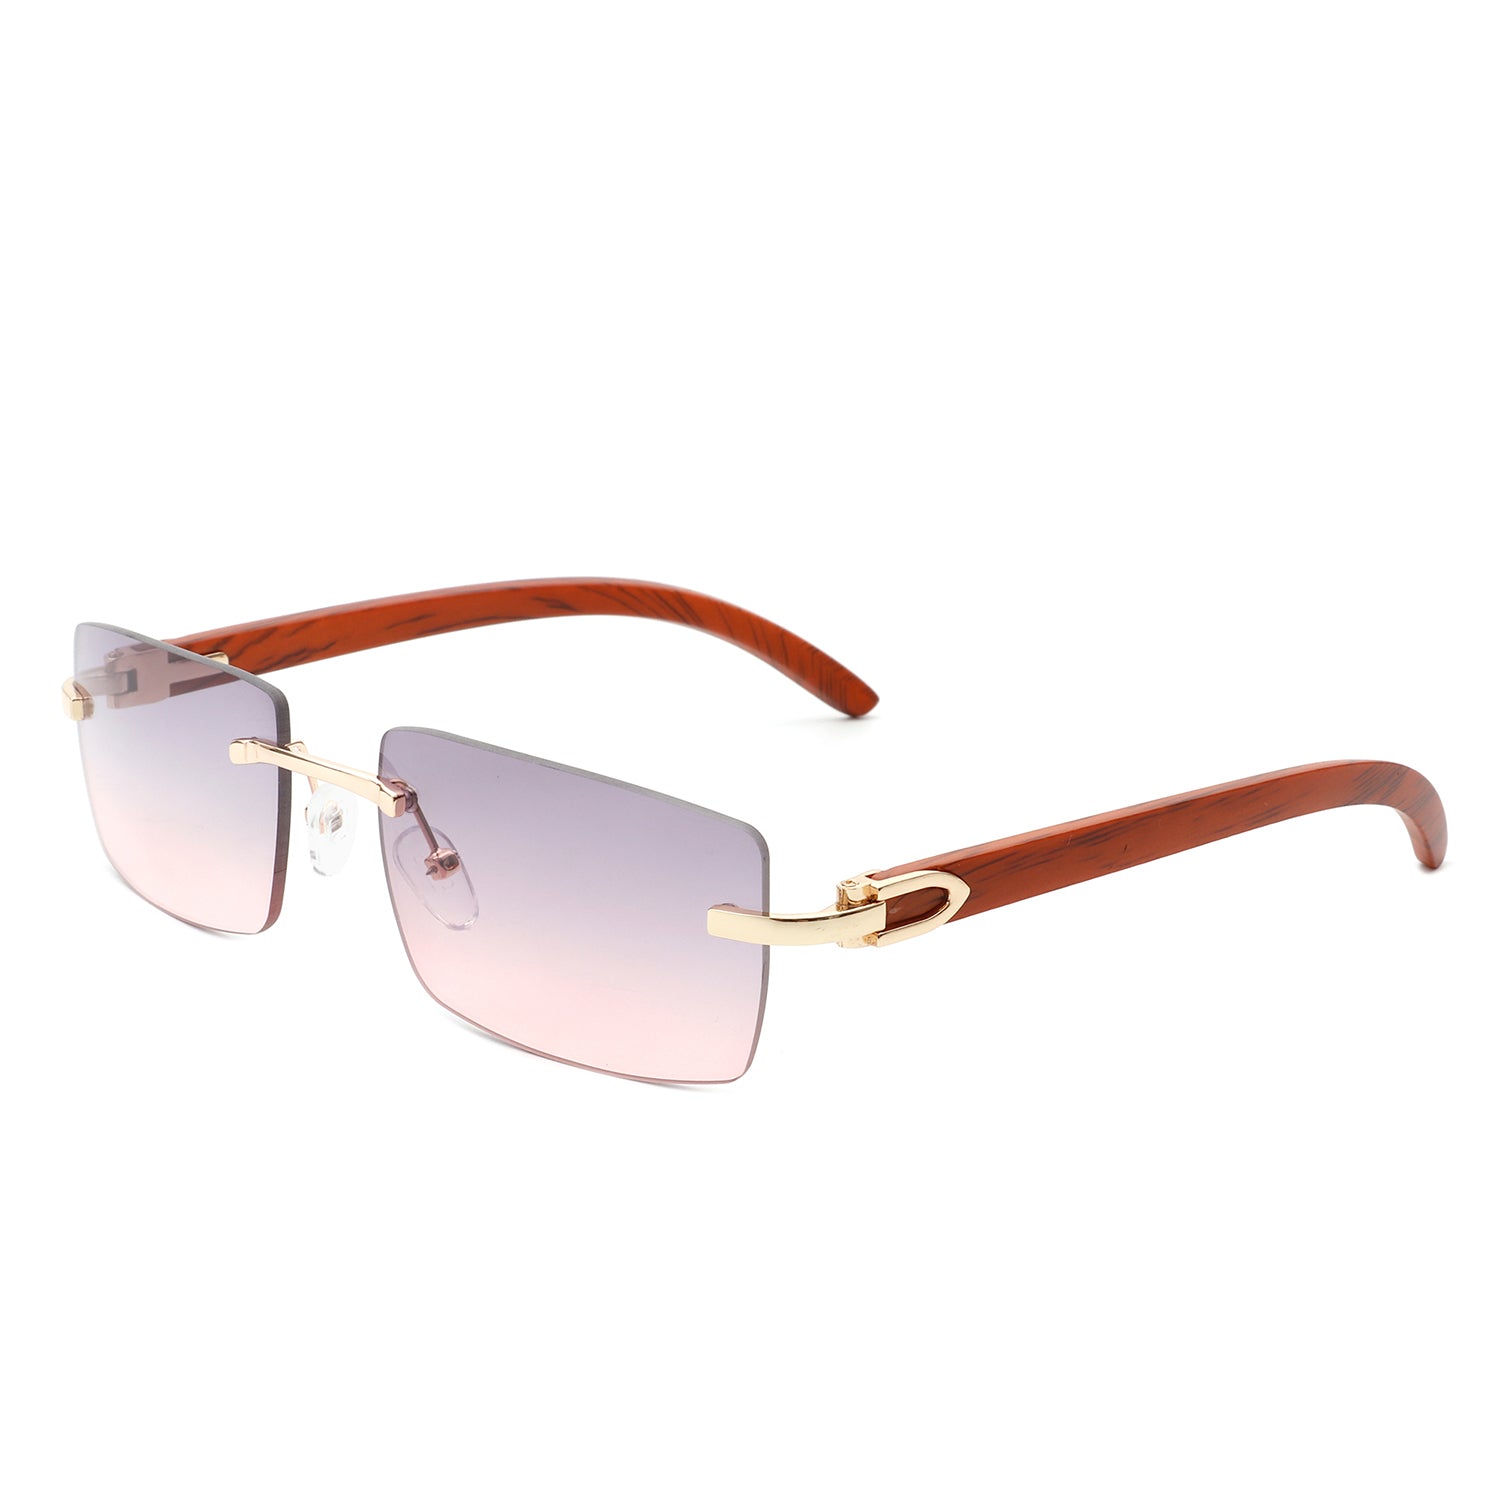 HW2028 - Rectangle Rimless Retro Frameless Fashion Tinted Sunglasses